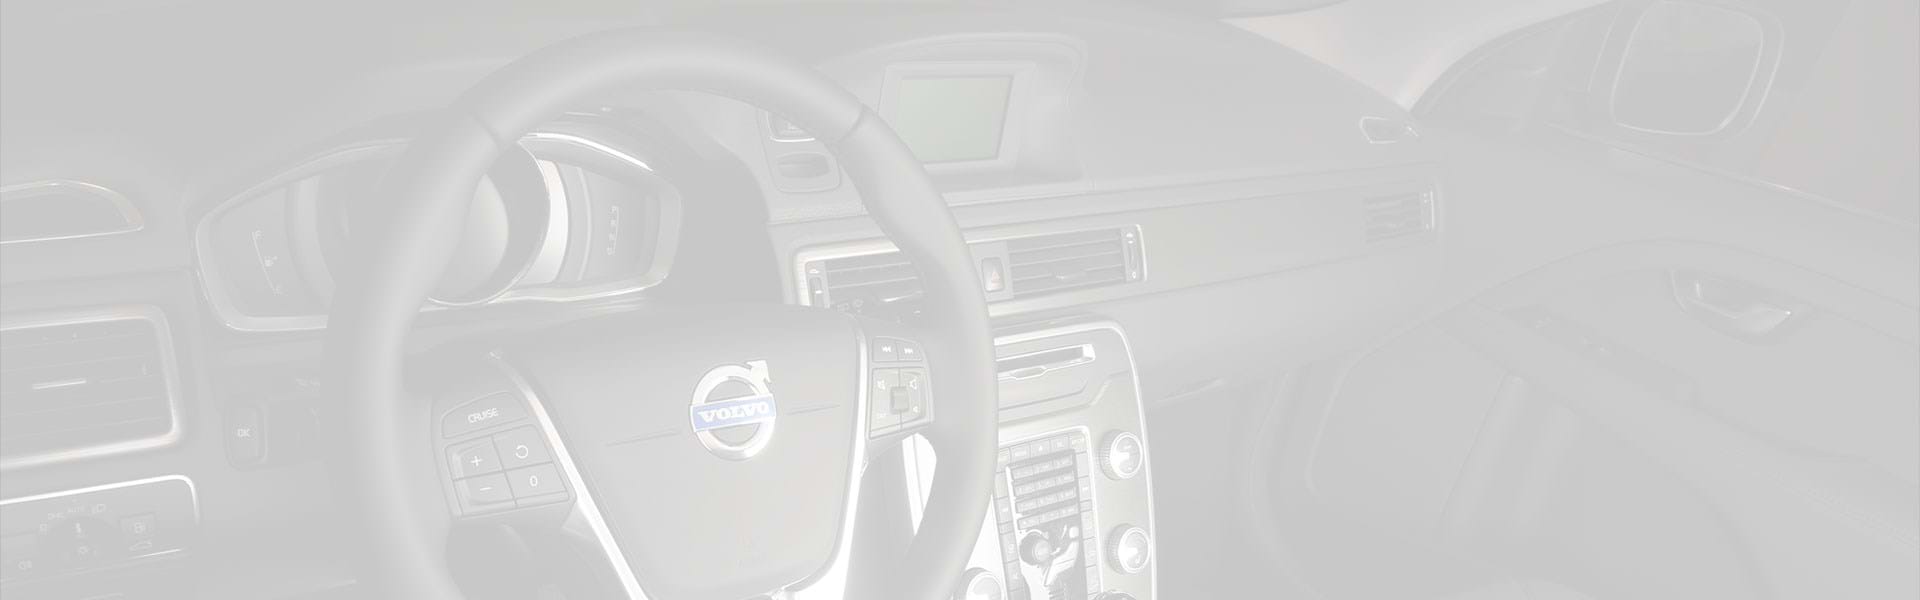 Interior of Volvo car